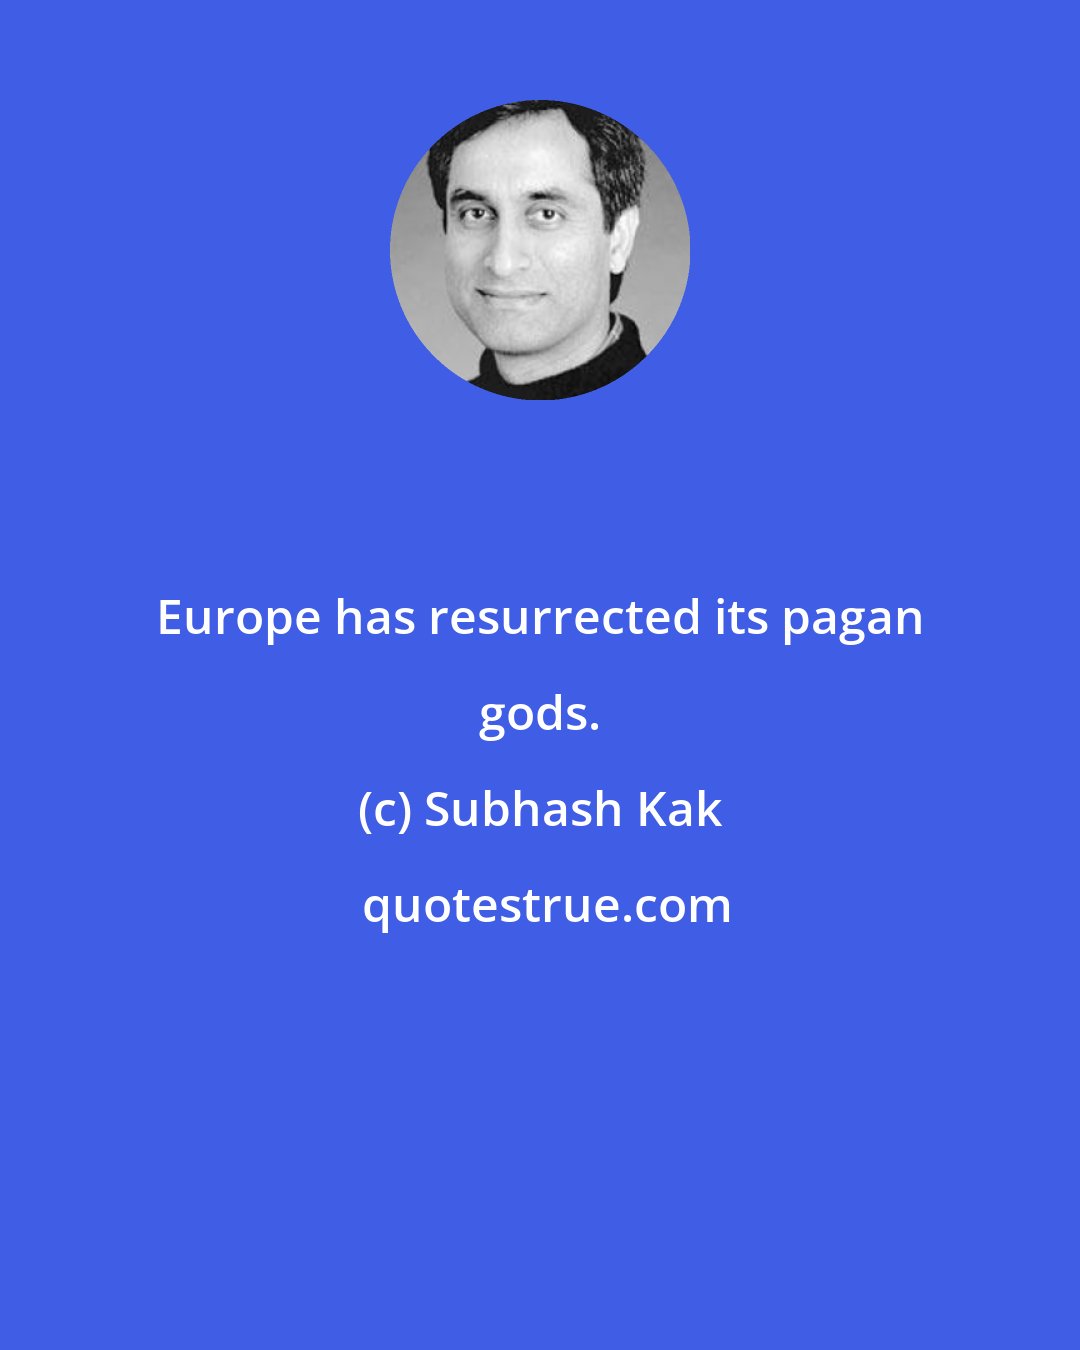 Subhash Kak: Europe has resurrected its pagan gods.